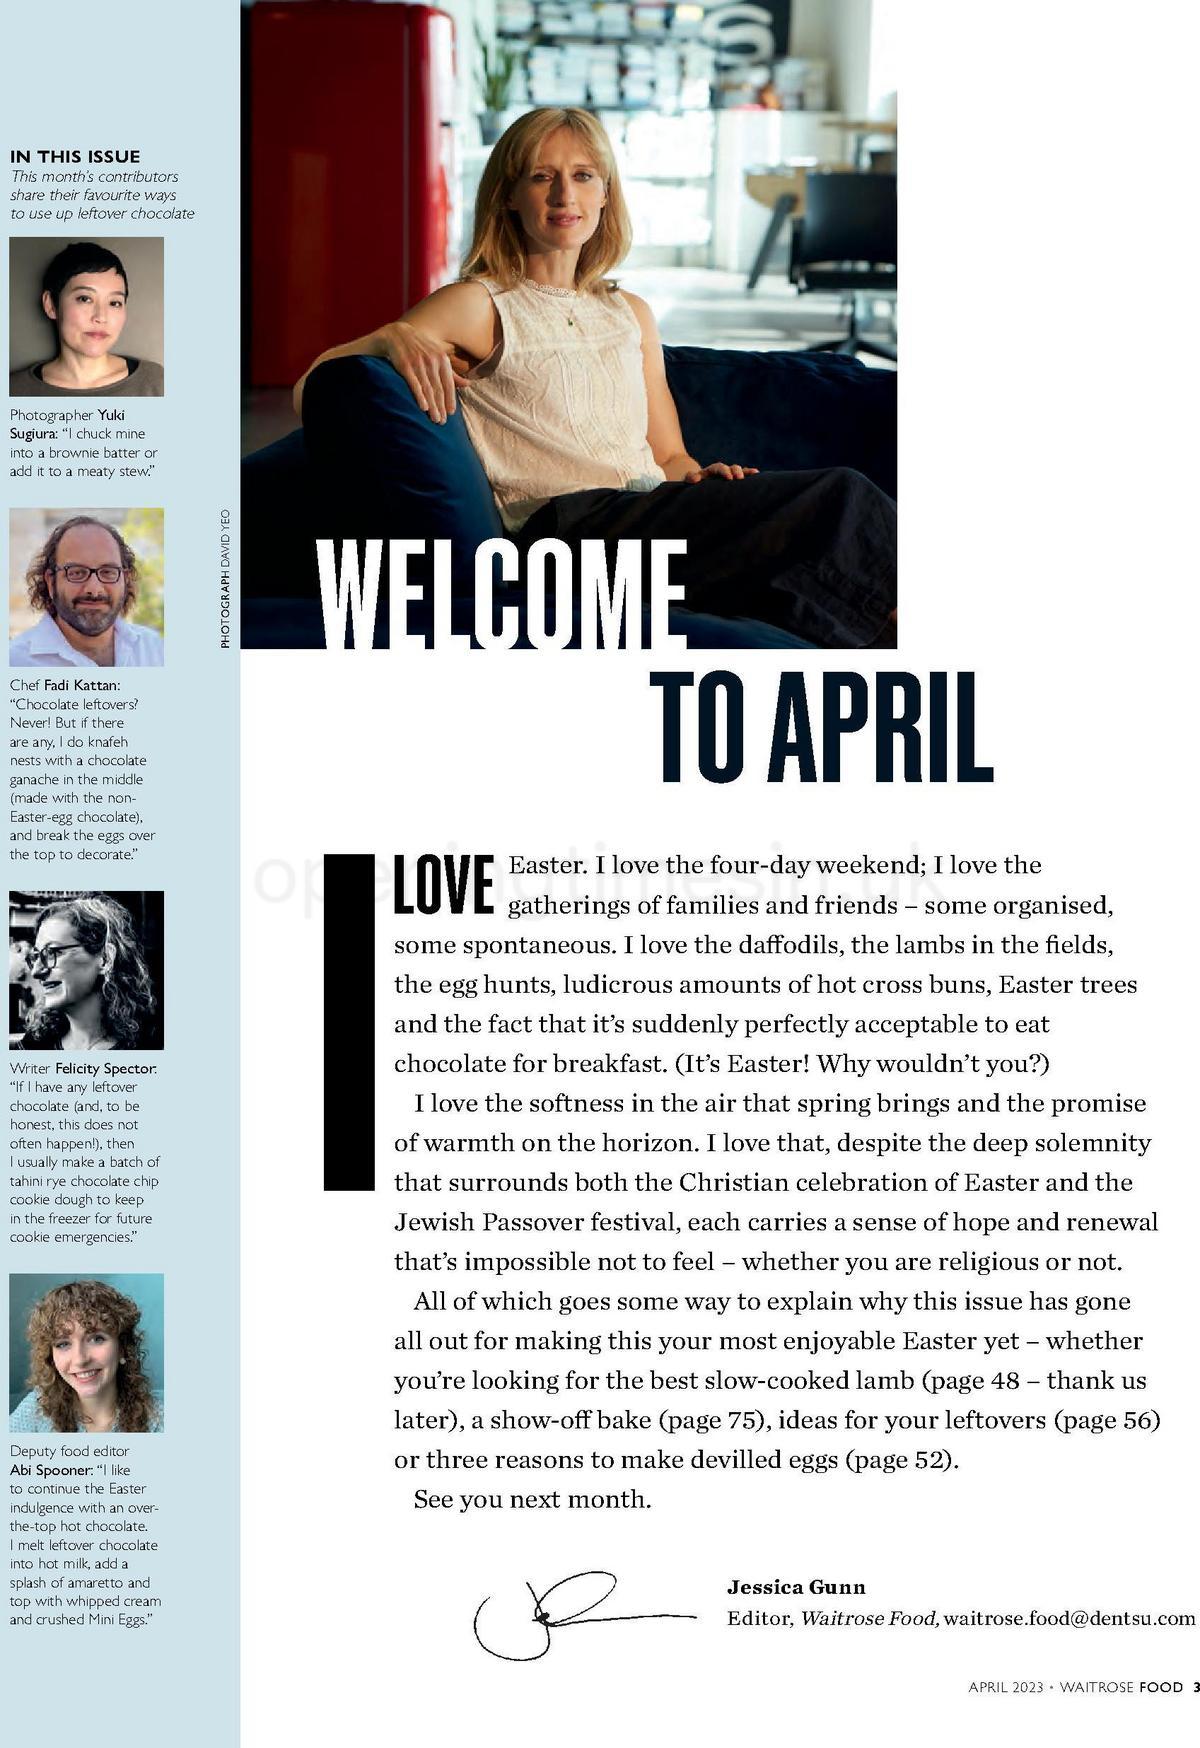 Waitrose Magazine April Offers from 1 April